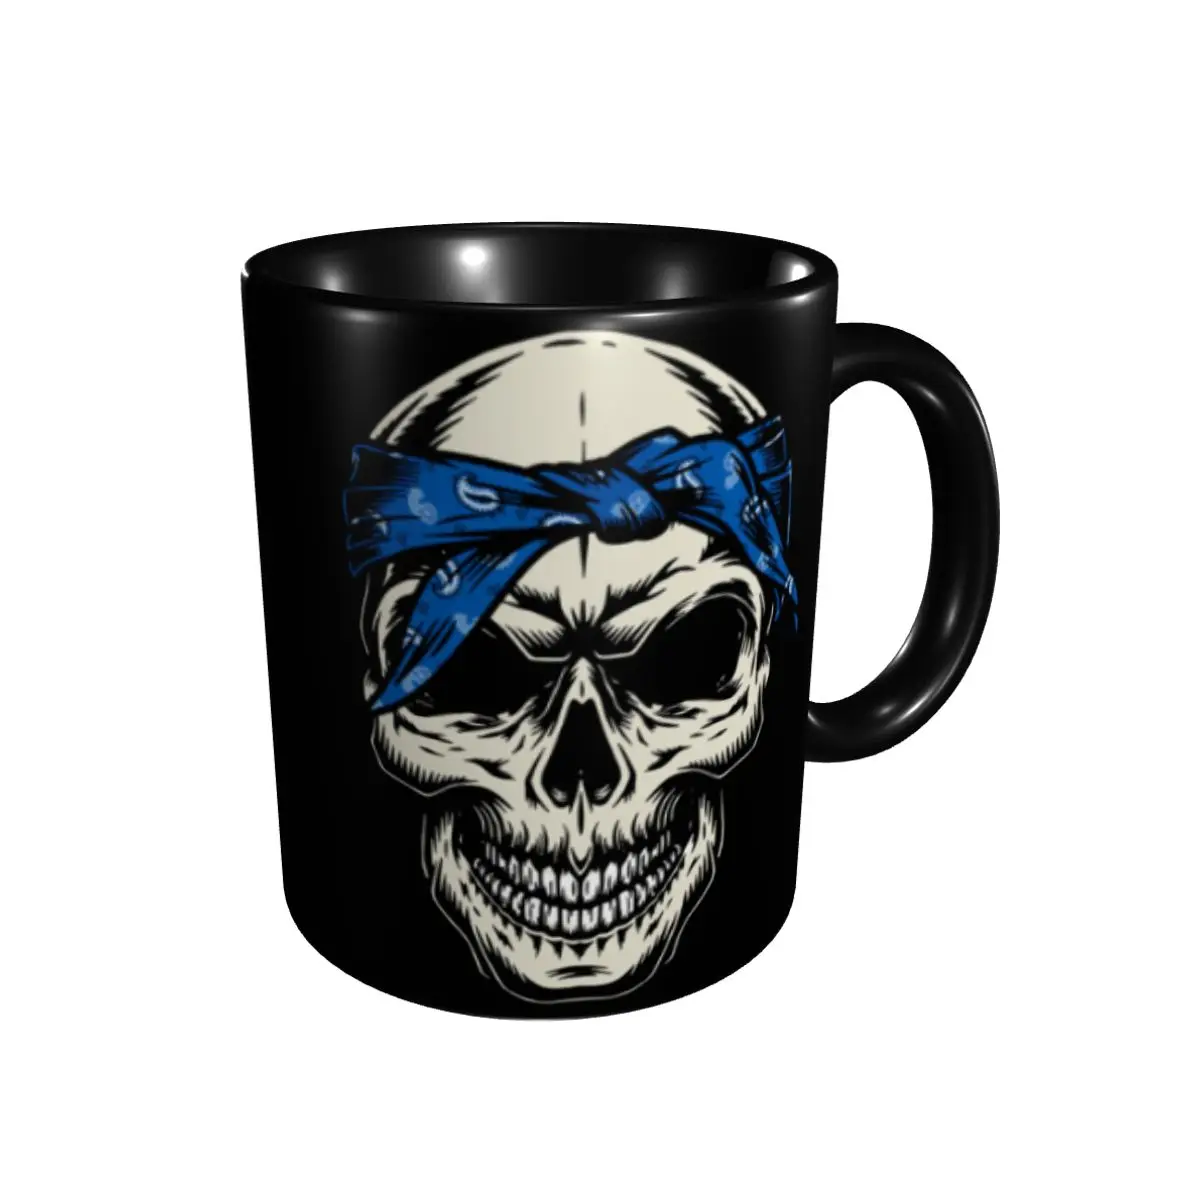 Promo CRIPS Skull W Bandana 2.0 Mugs Graphic Cool Cups Mugs Print Humor R346 tea cups